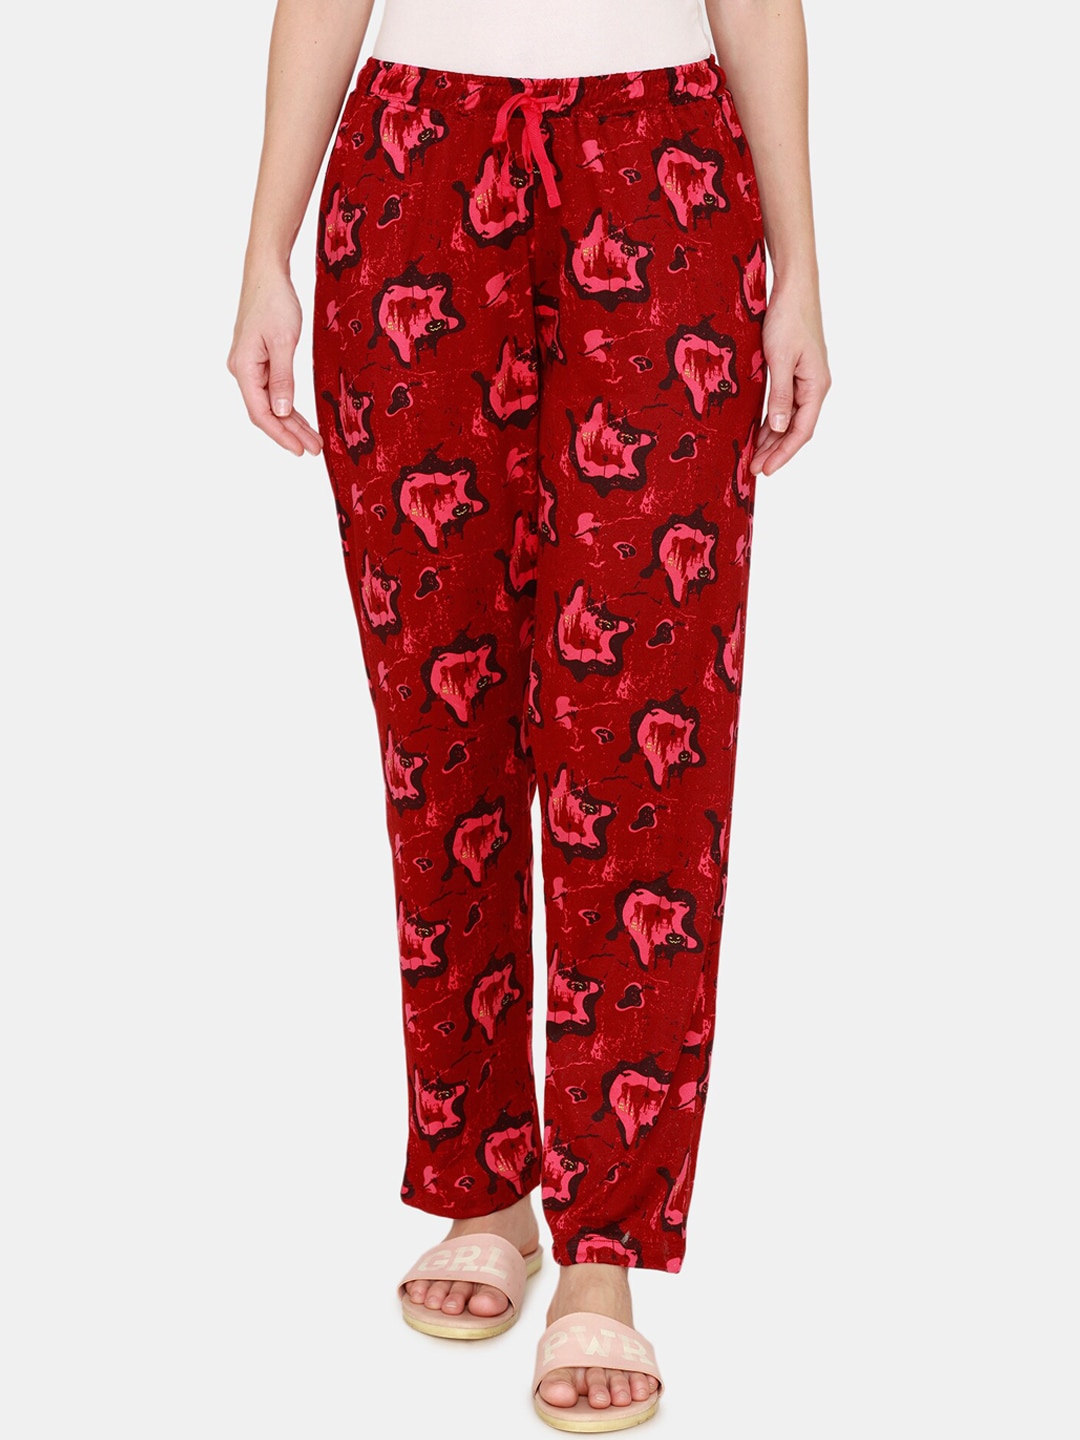 Zivame Women Red Halloween Printed Knitted Cotton Pyjamas Price in India